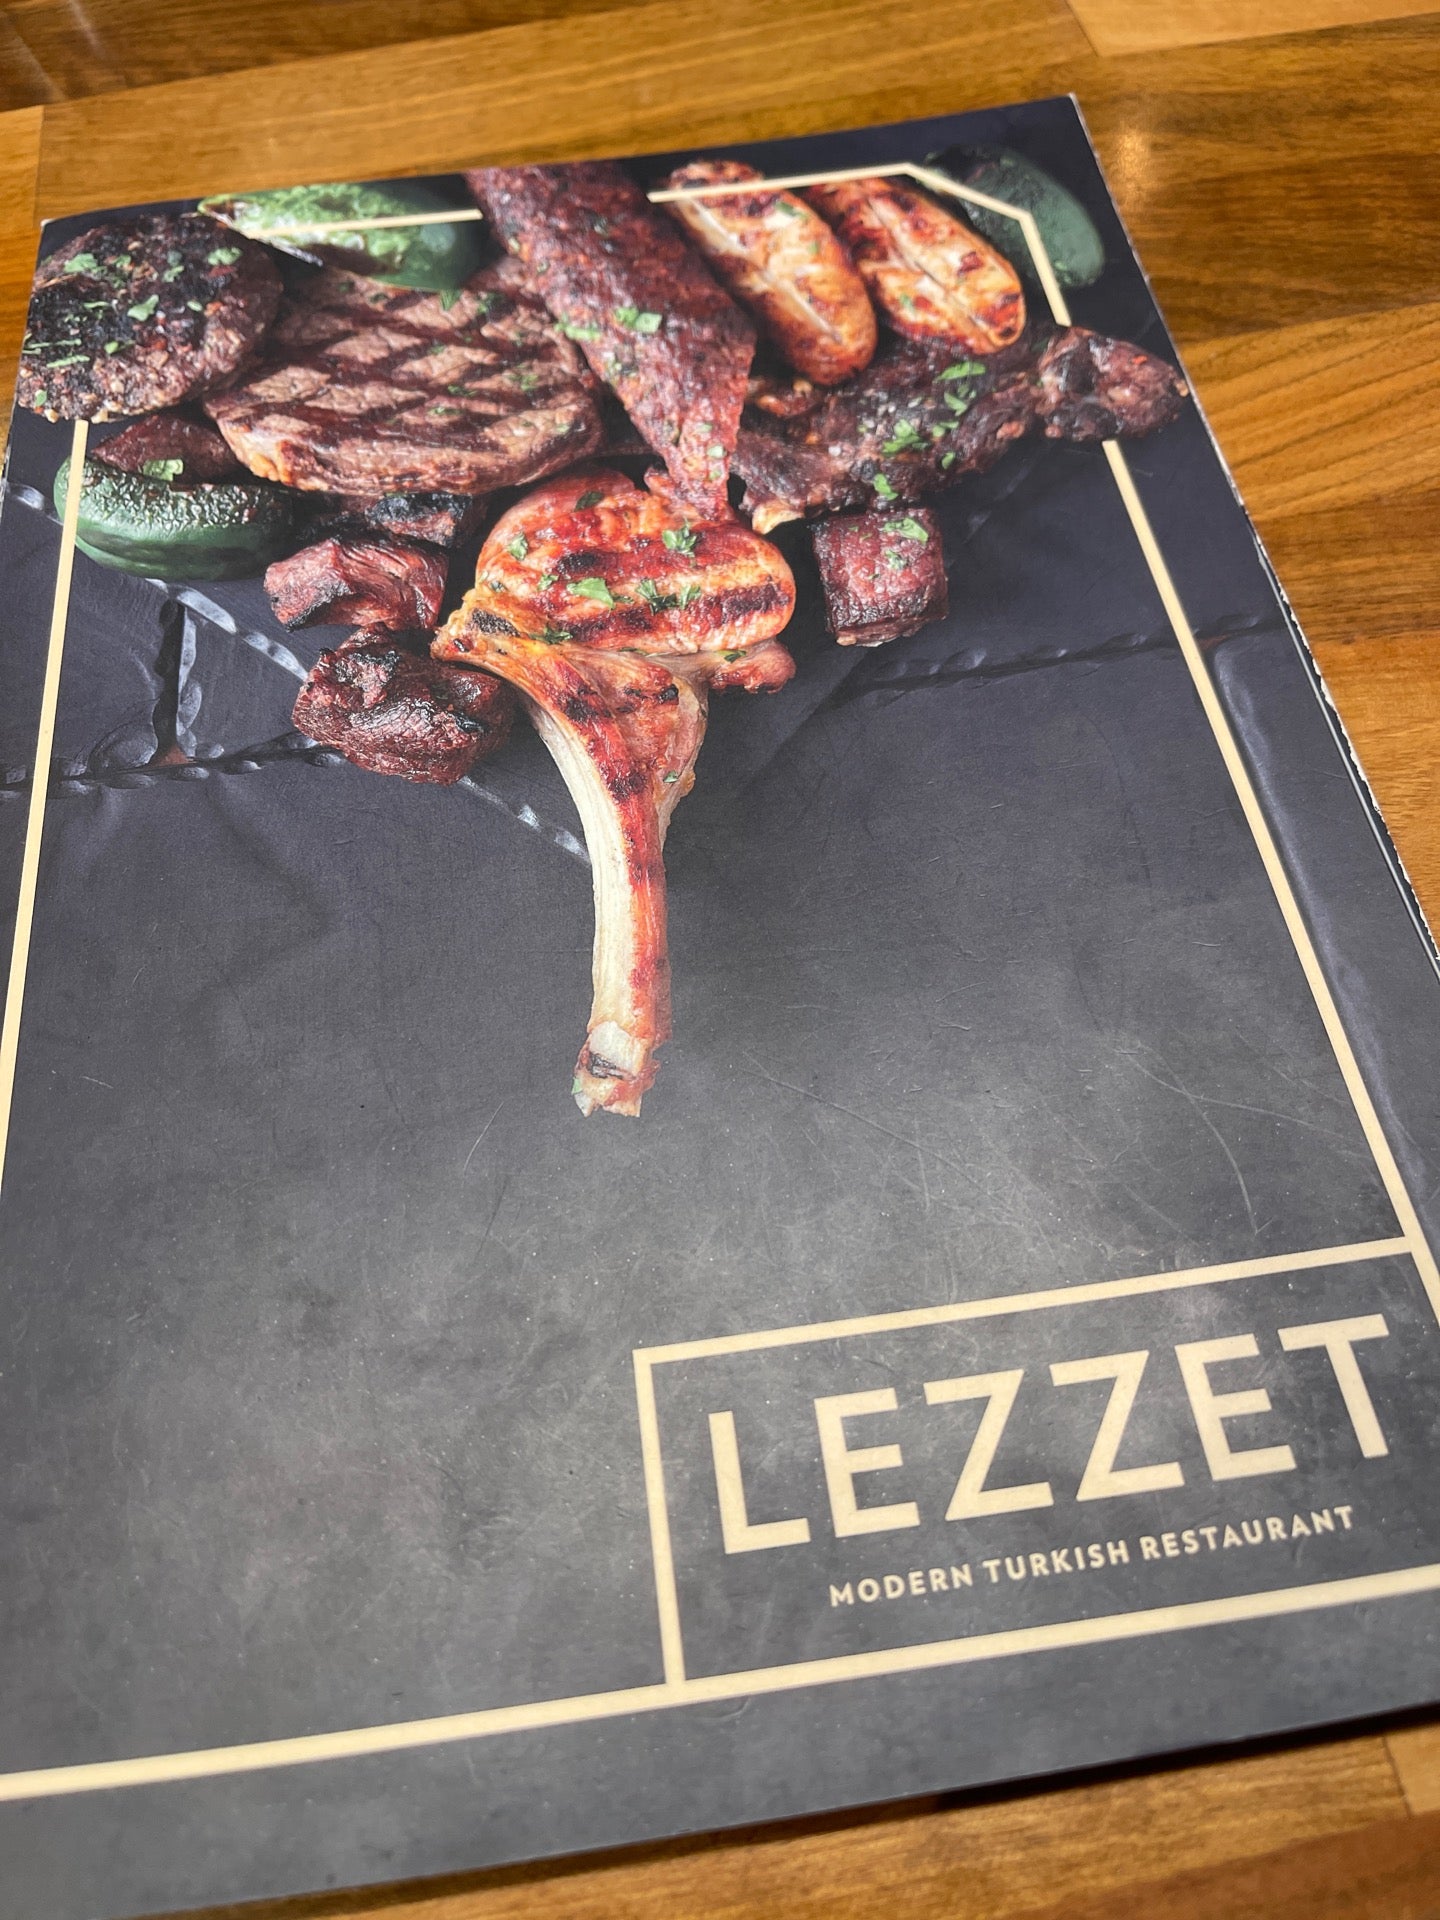 Lezzet Restaurant